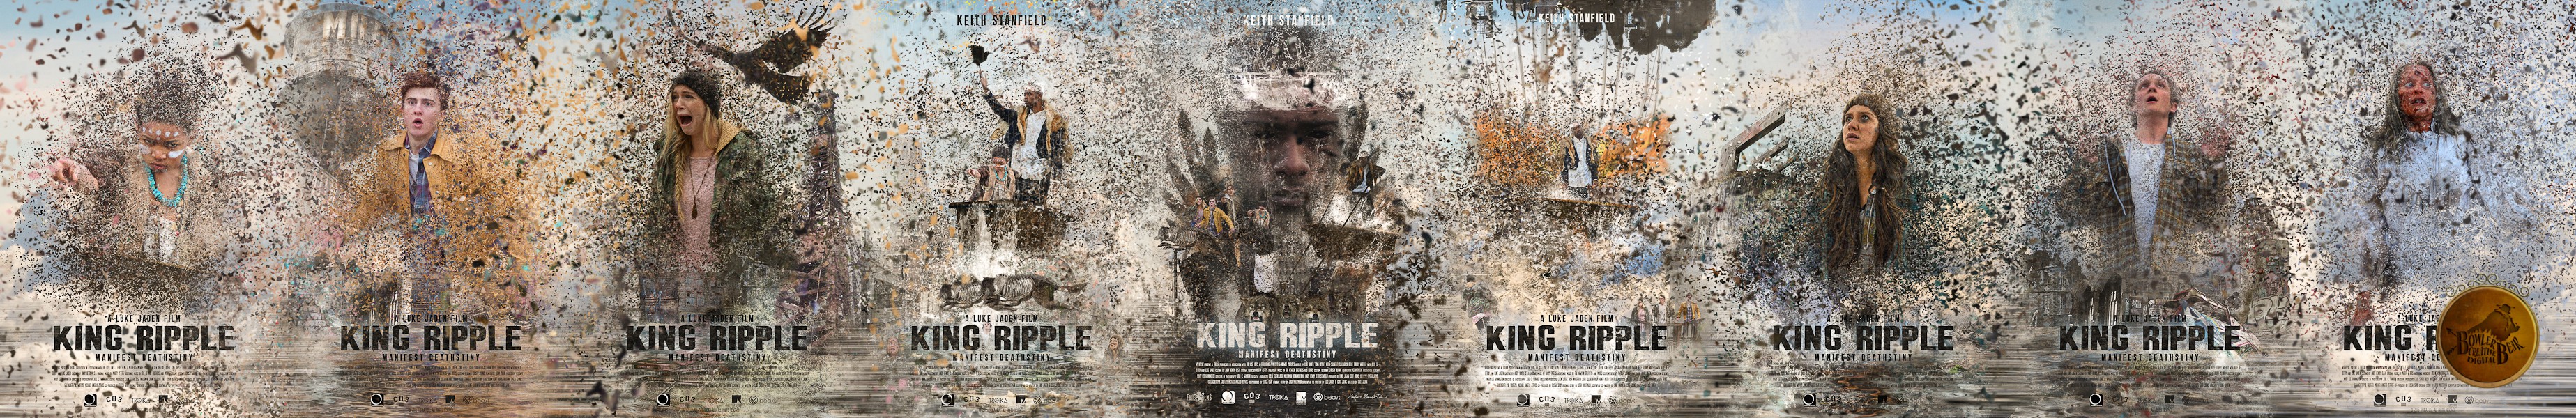 Mega Sized Movie Poster Image for King Ripple